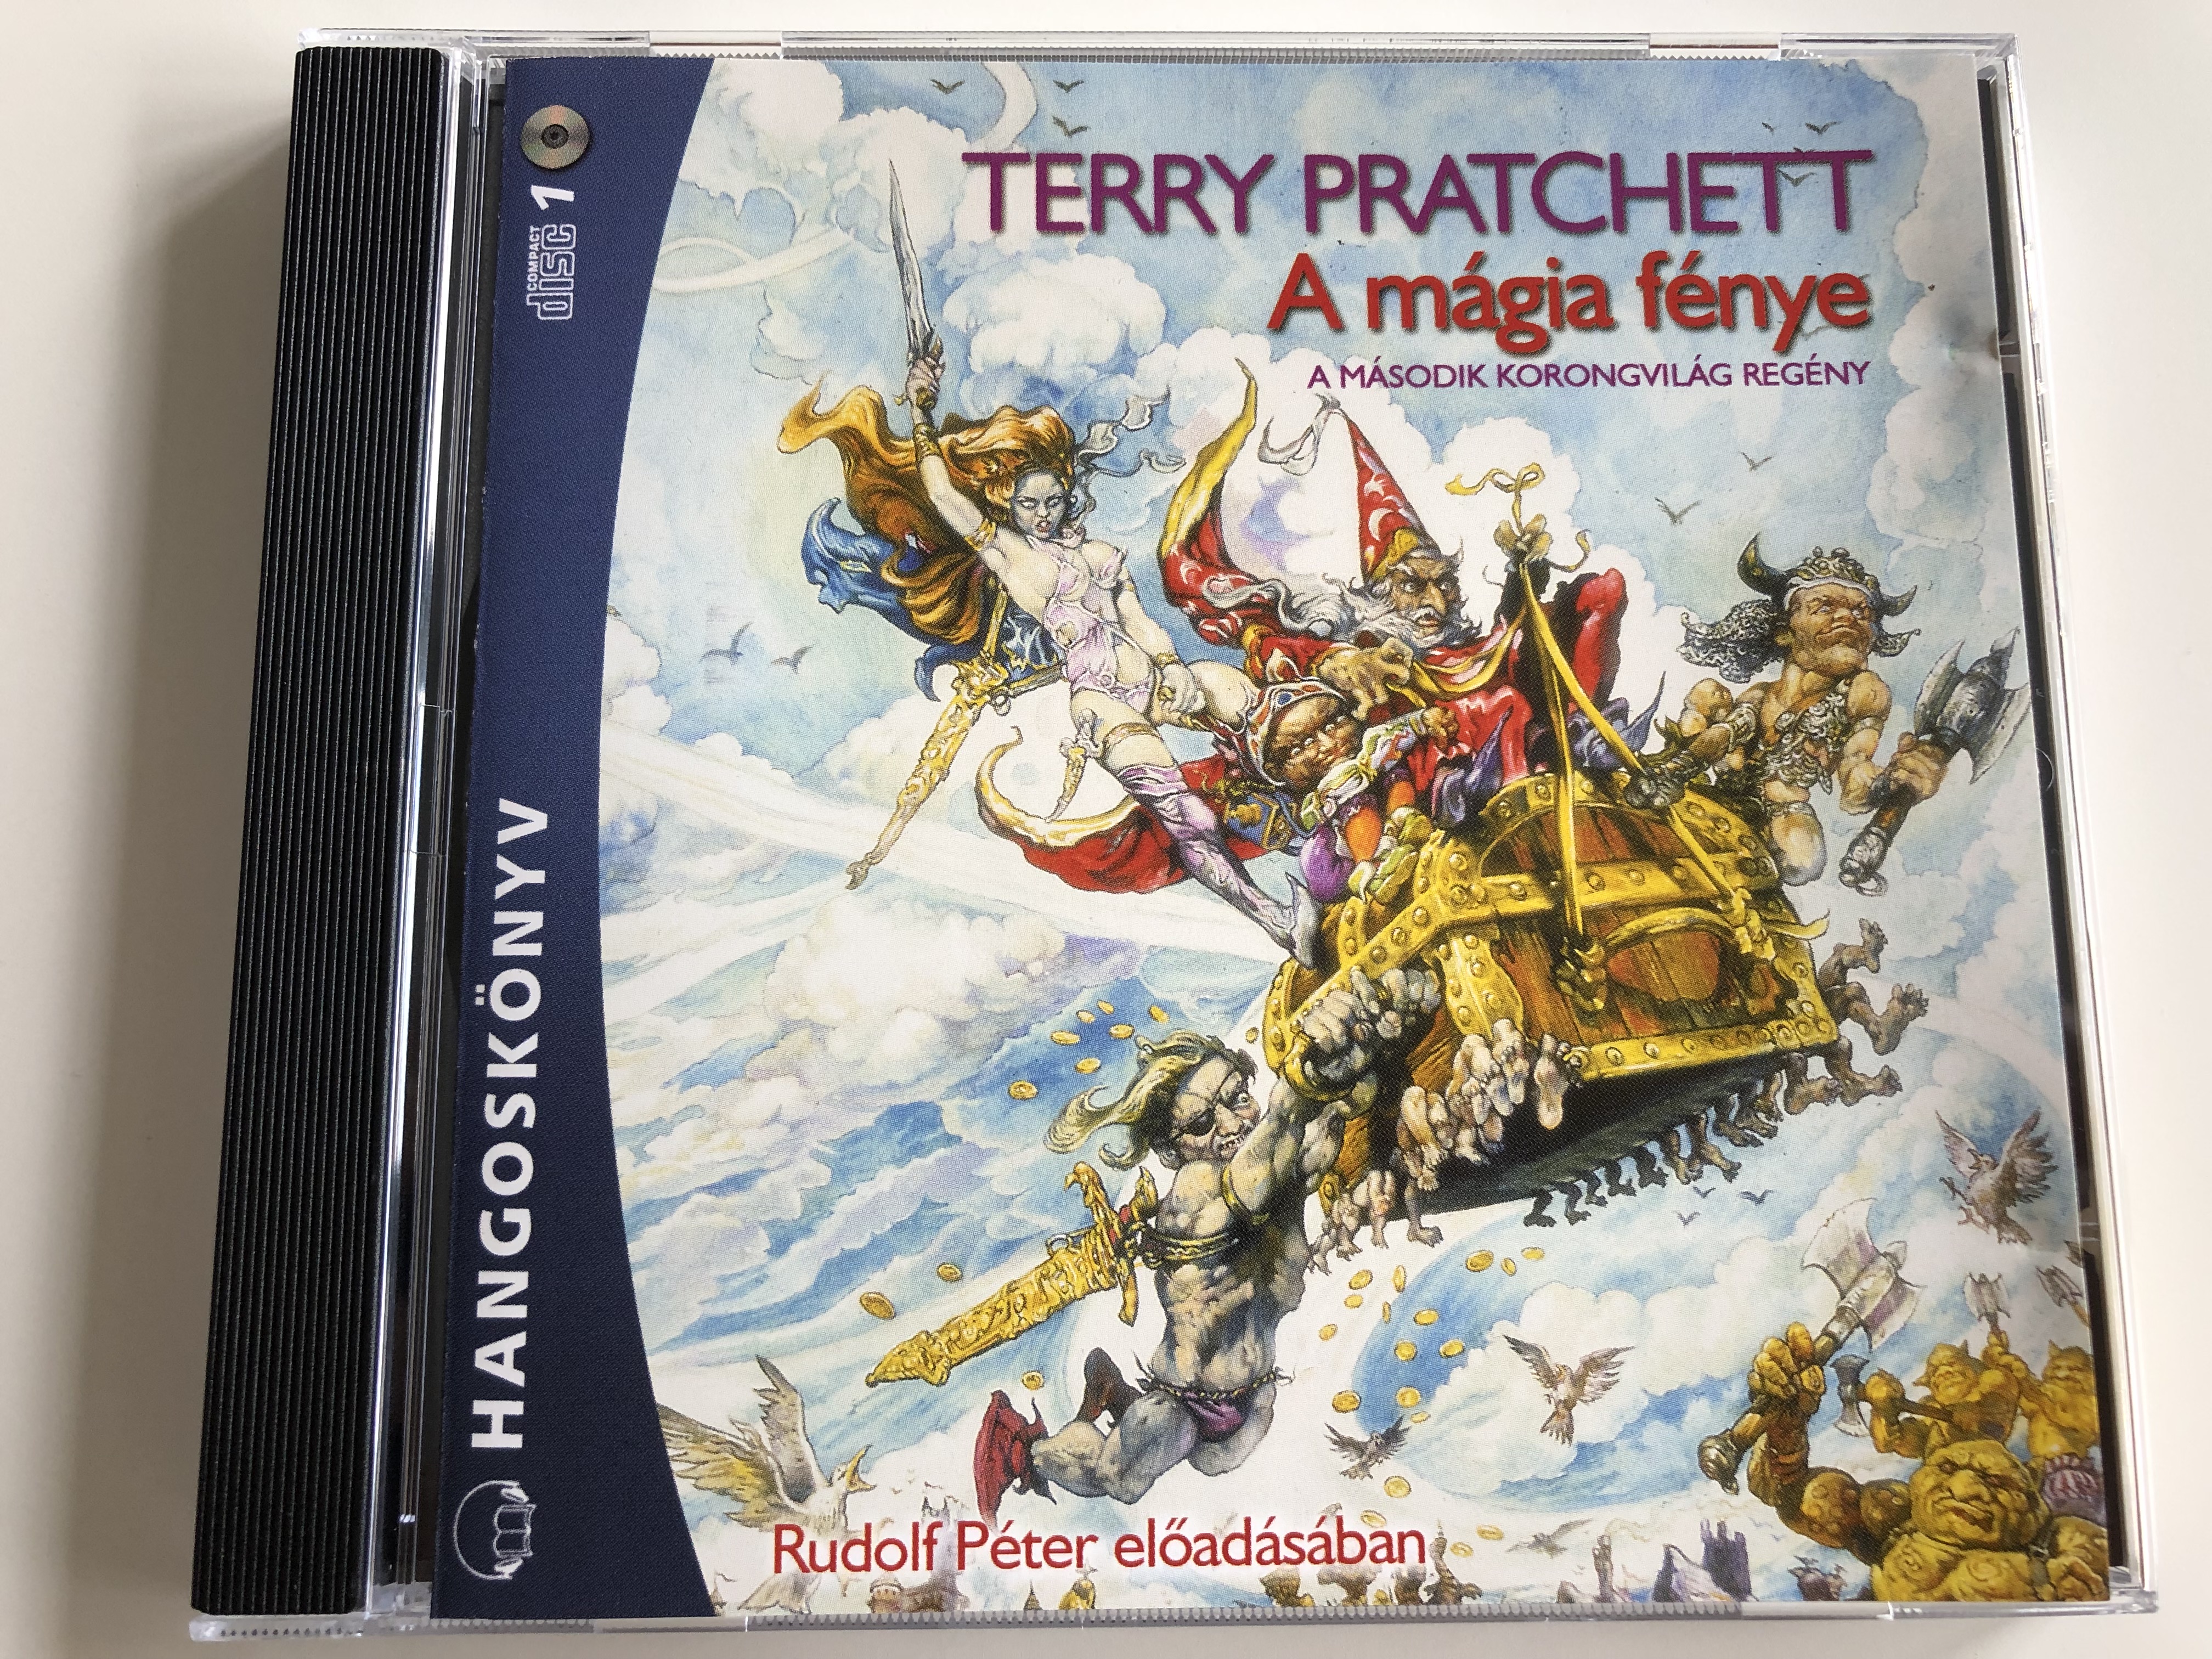 terry-pratchett-a-m-gia-f-nye-a-m-sodik-korongvil-g-reg-ny-read-by-rudolf-p-ter-hungarian-audio-book-edition-of-the-light-fantastic-by-terry-pratchett-mp3-audio-cd-2009-kossuth-mojzer-kiad-1-.jpg